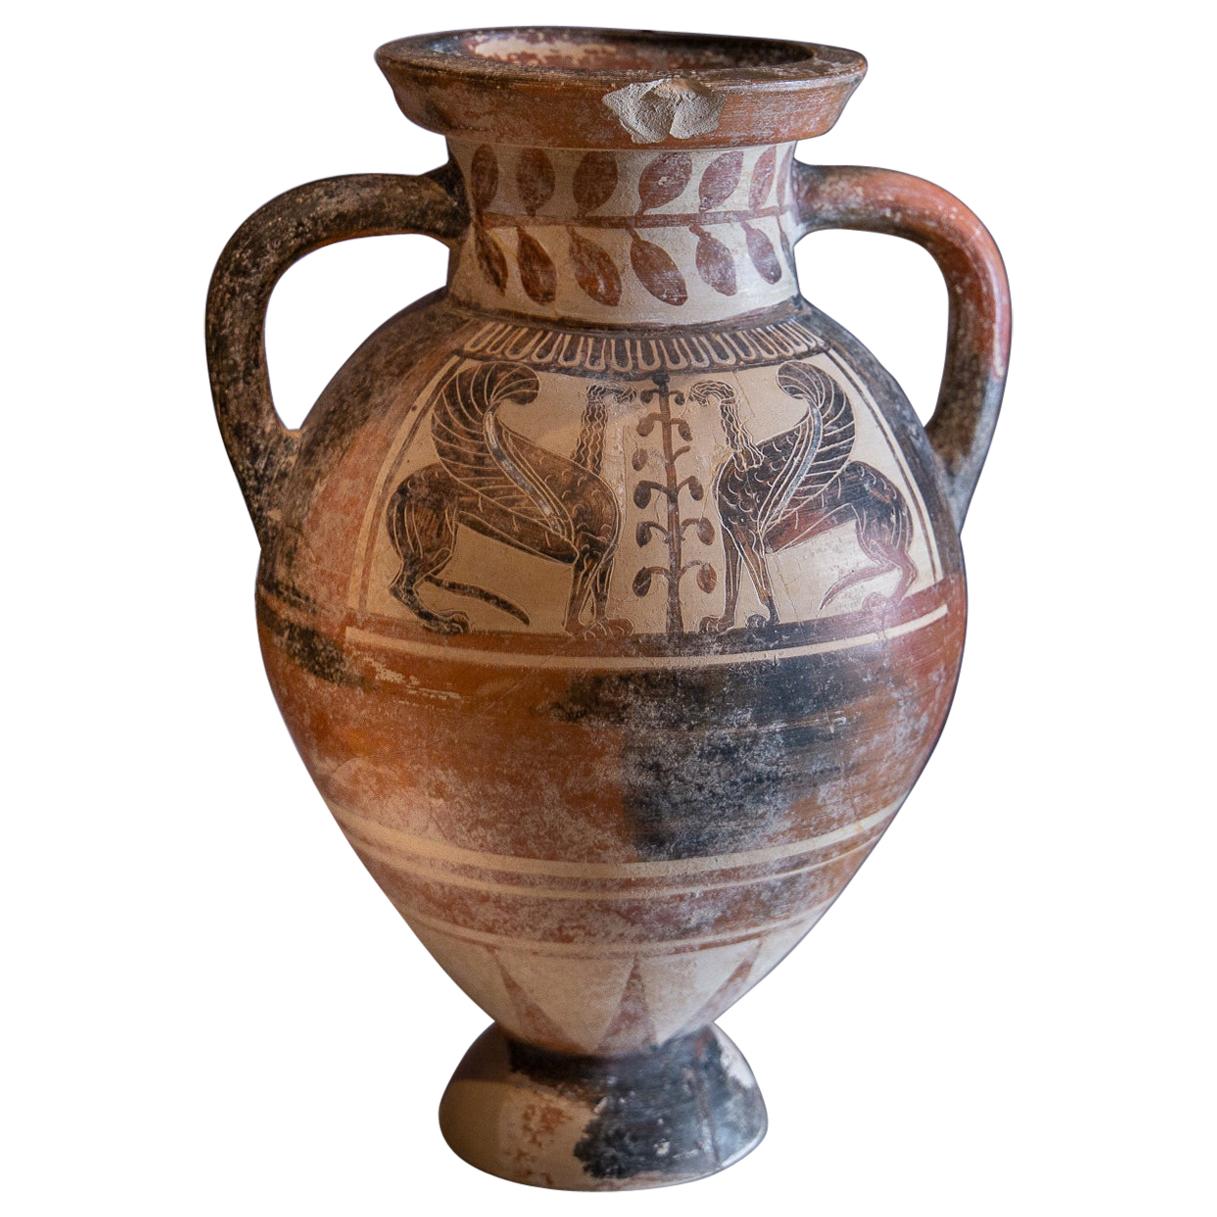 Etrusco-Corinthian amphora, Italy, End of the 7th Century BC